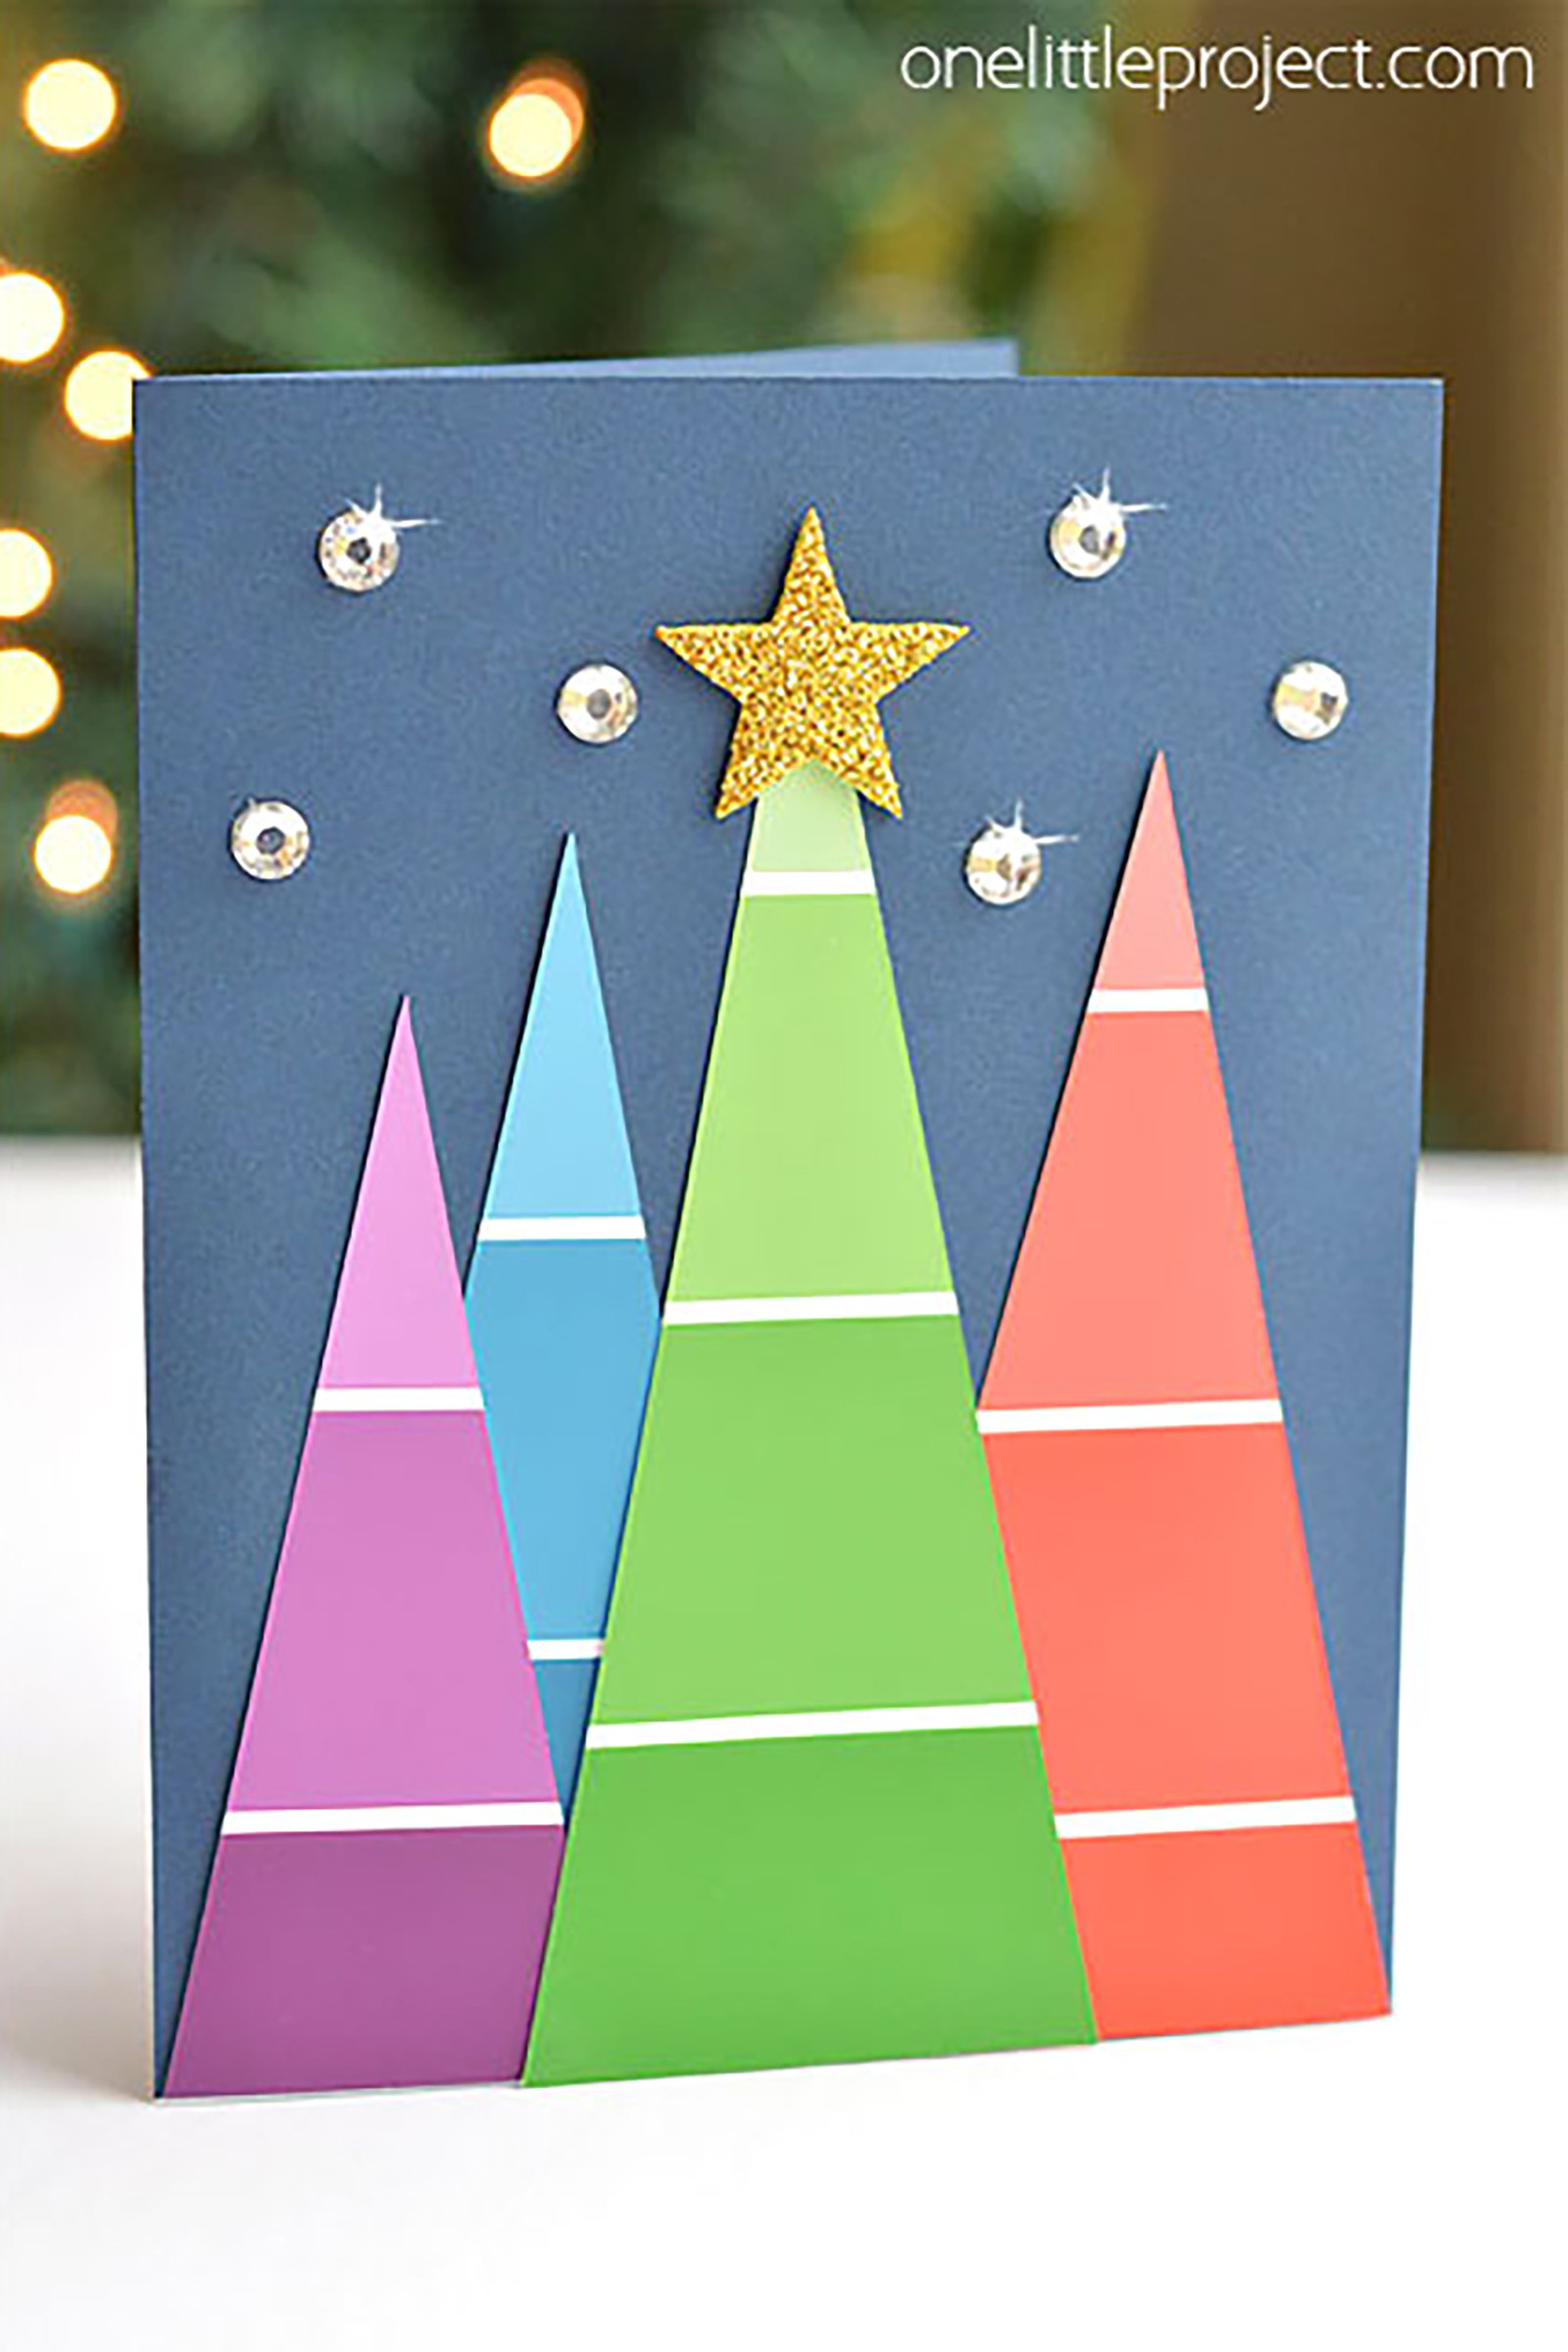 Best ideas about DIY Christmas Card Ideas
. Save or Pin 15 DIY Christmas Card Ideas Easy Homemade Christmas Now.